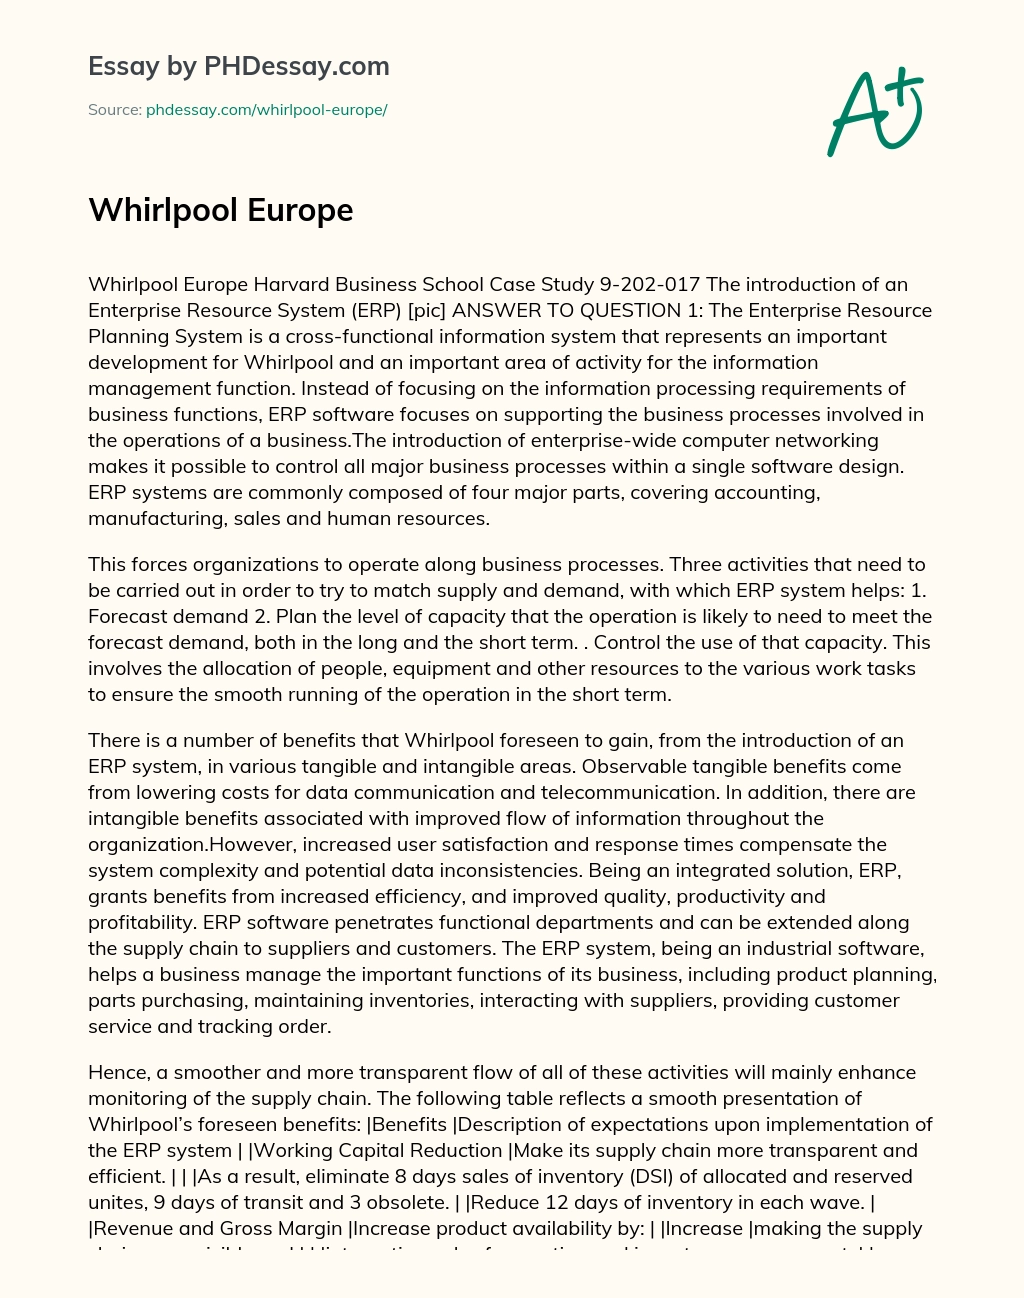 Whirlpool Europe essay